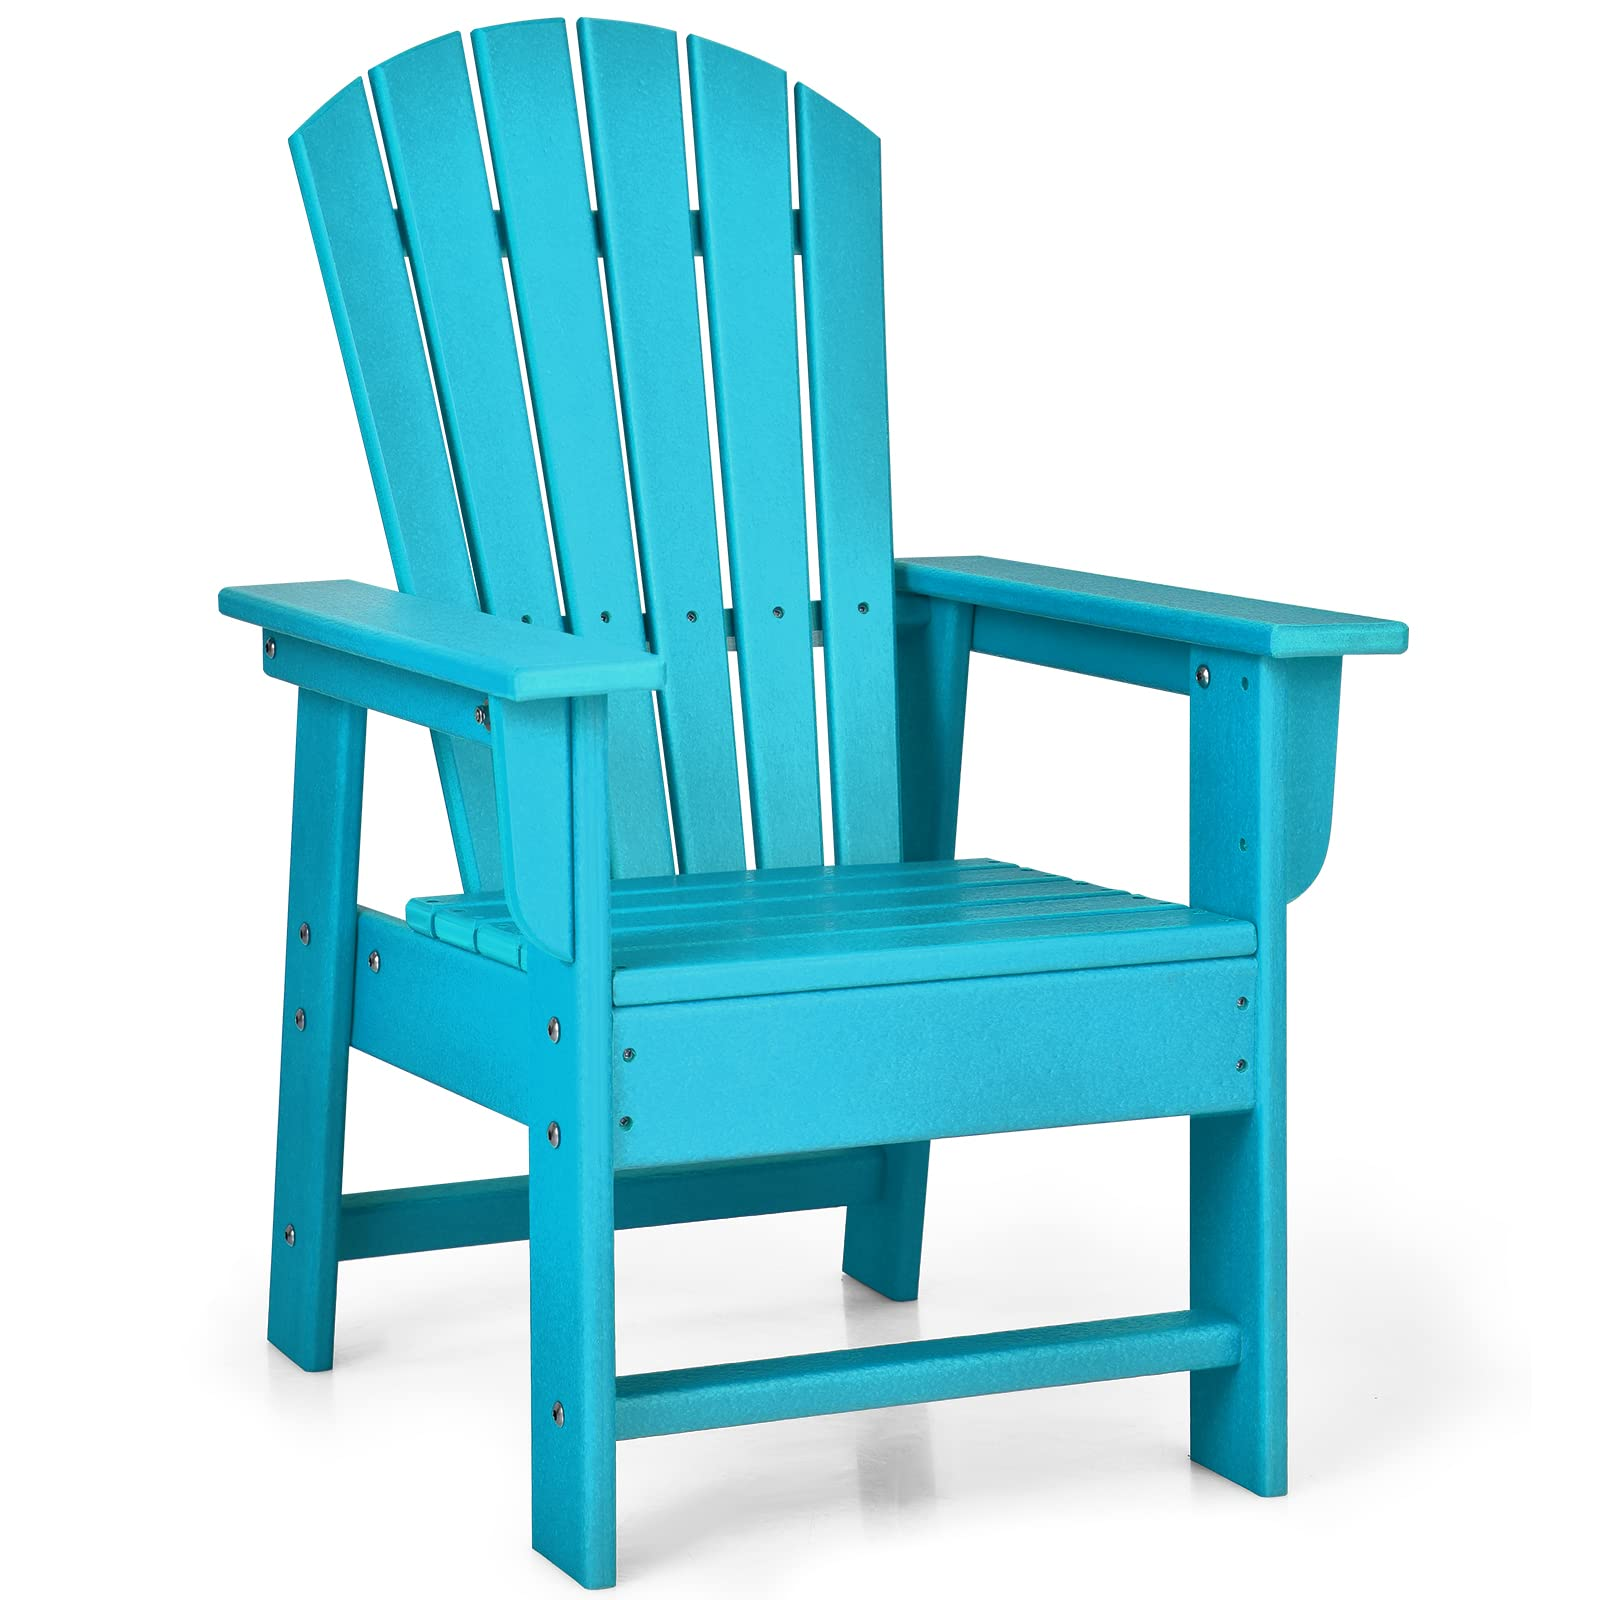 Giantex Adirondack Chair